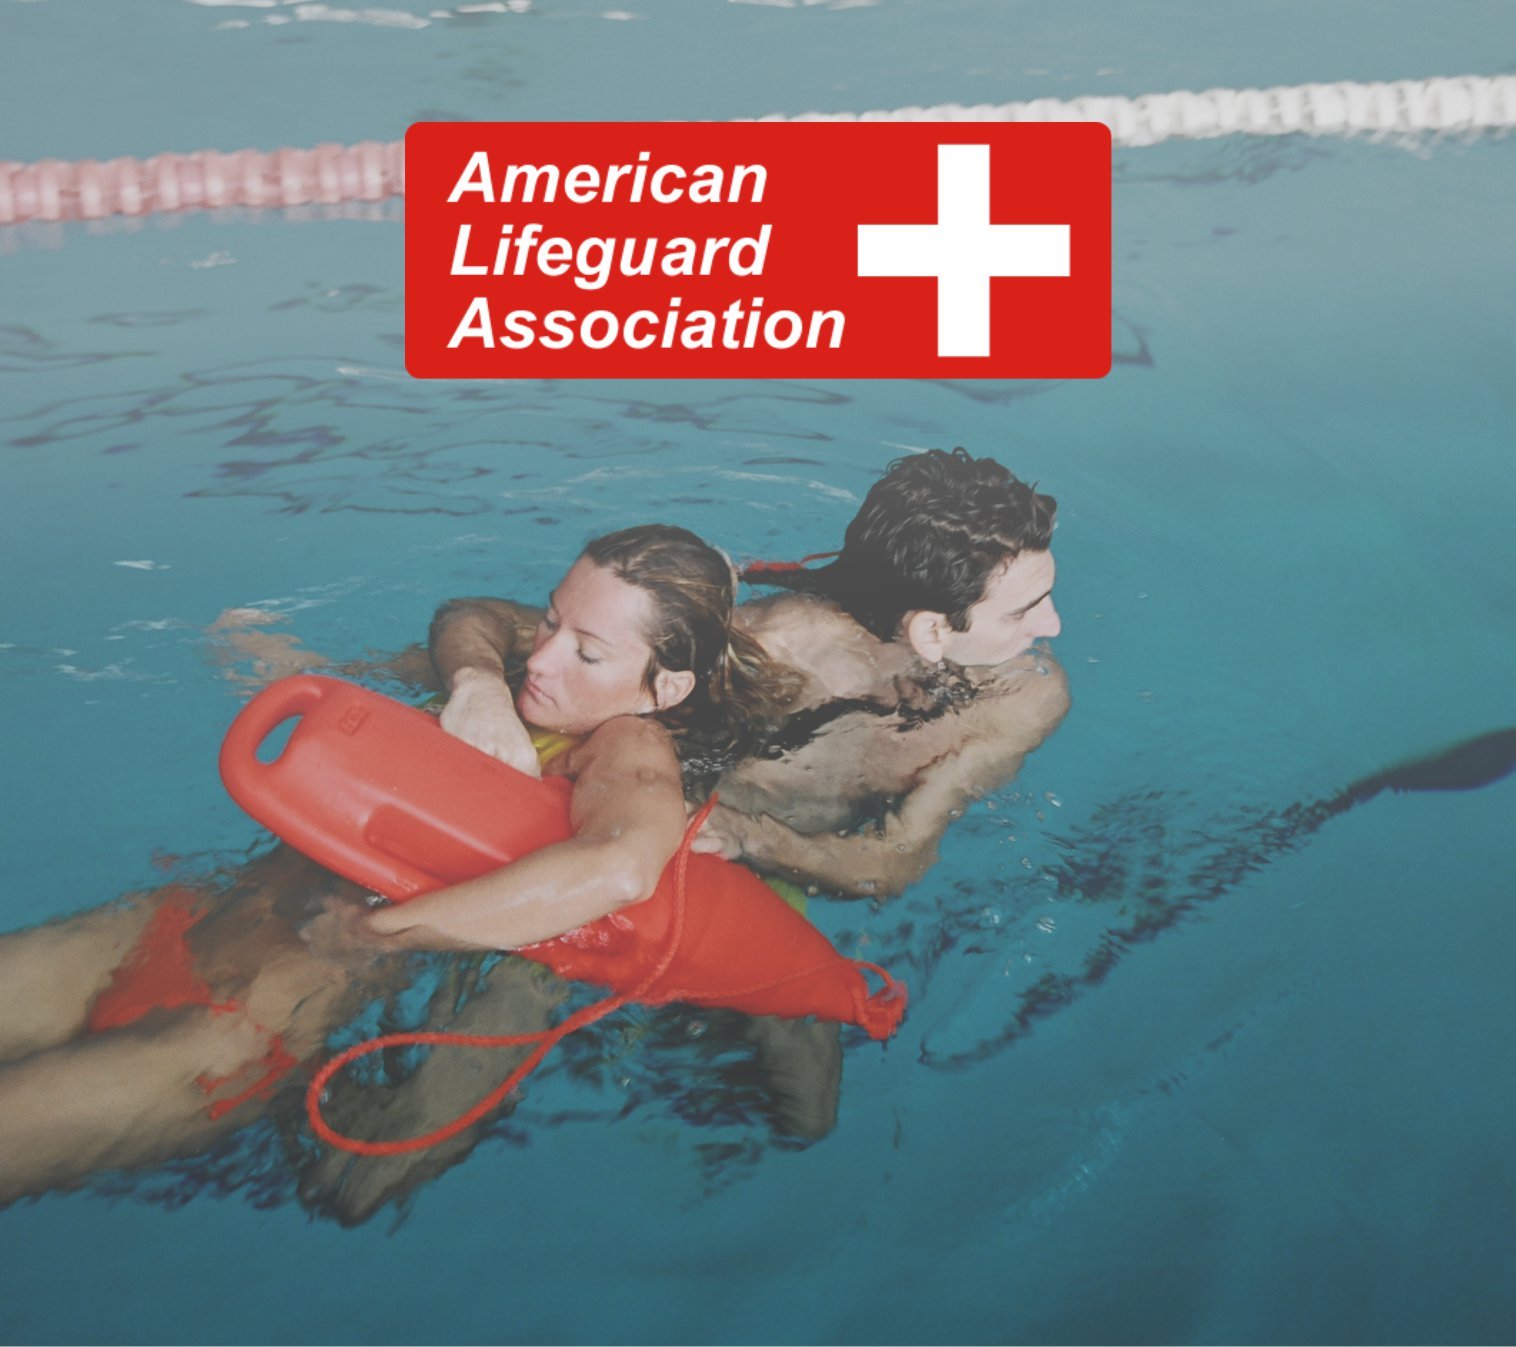 American Lifeguard Association | Lifeguard Training Certification, Classes